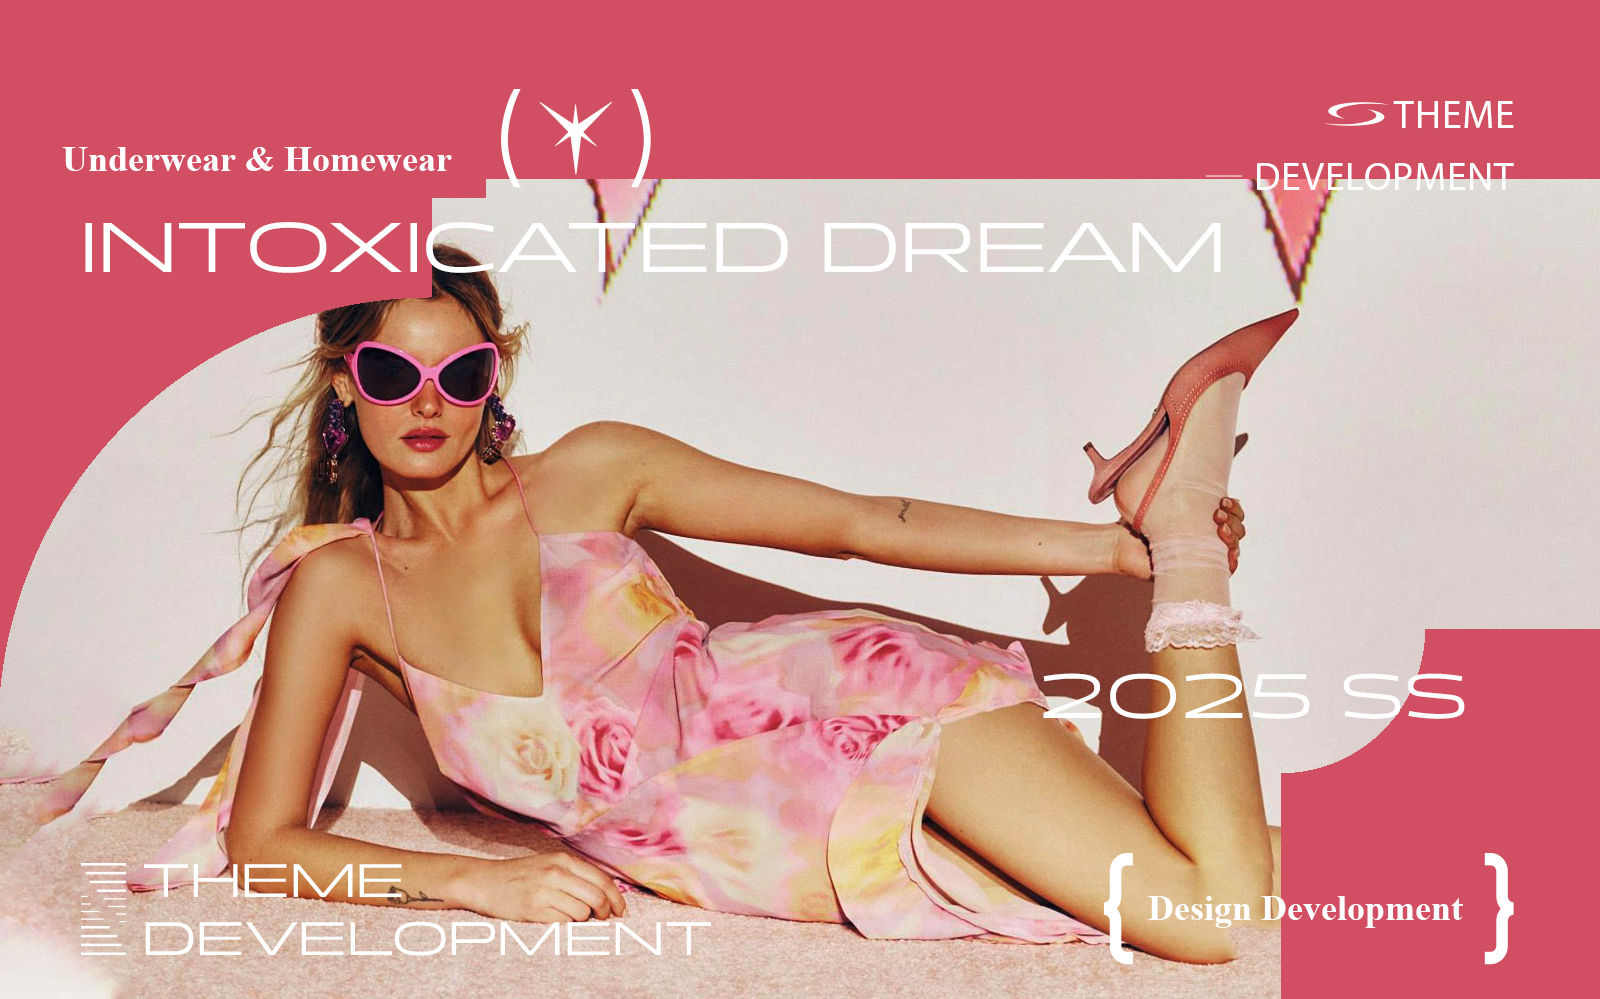 Intoxicated Dream -- The Design Development of Women's Underwear & Homewear